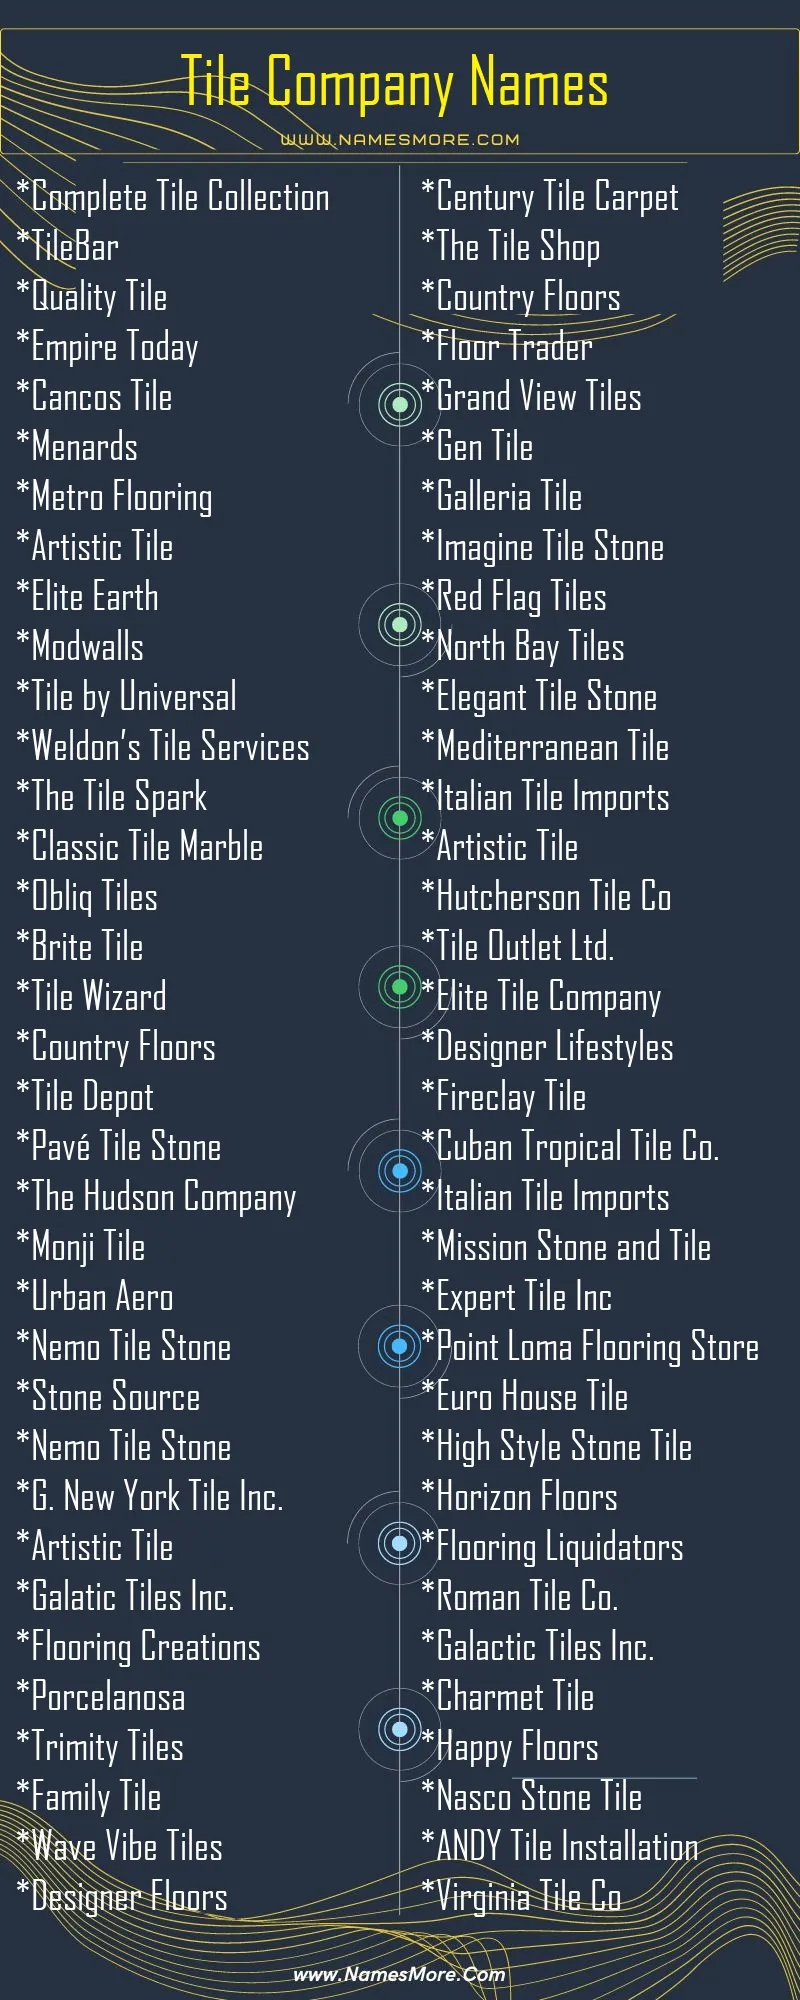 1900+ Tile Company Names & Business Names [Unique & Cool] List Infographic